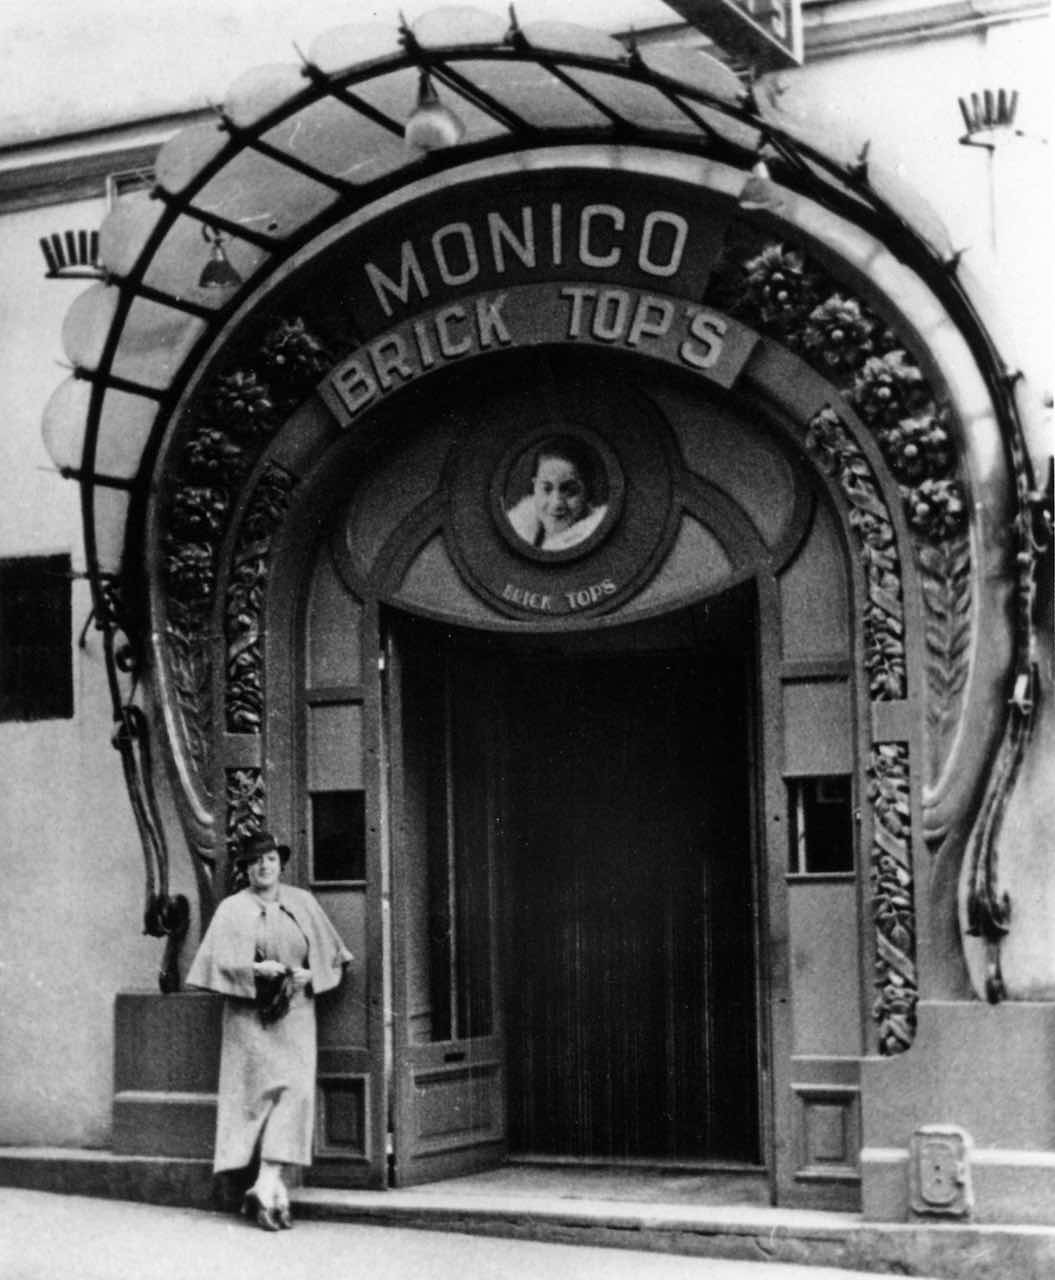 Bricktop Monico 1934 - copie.jpg